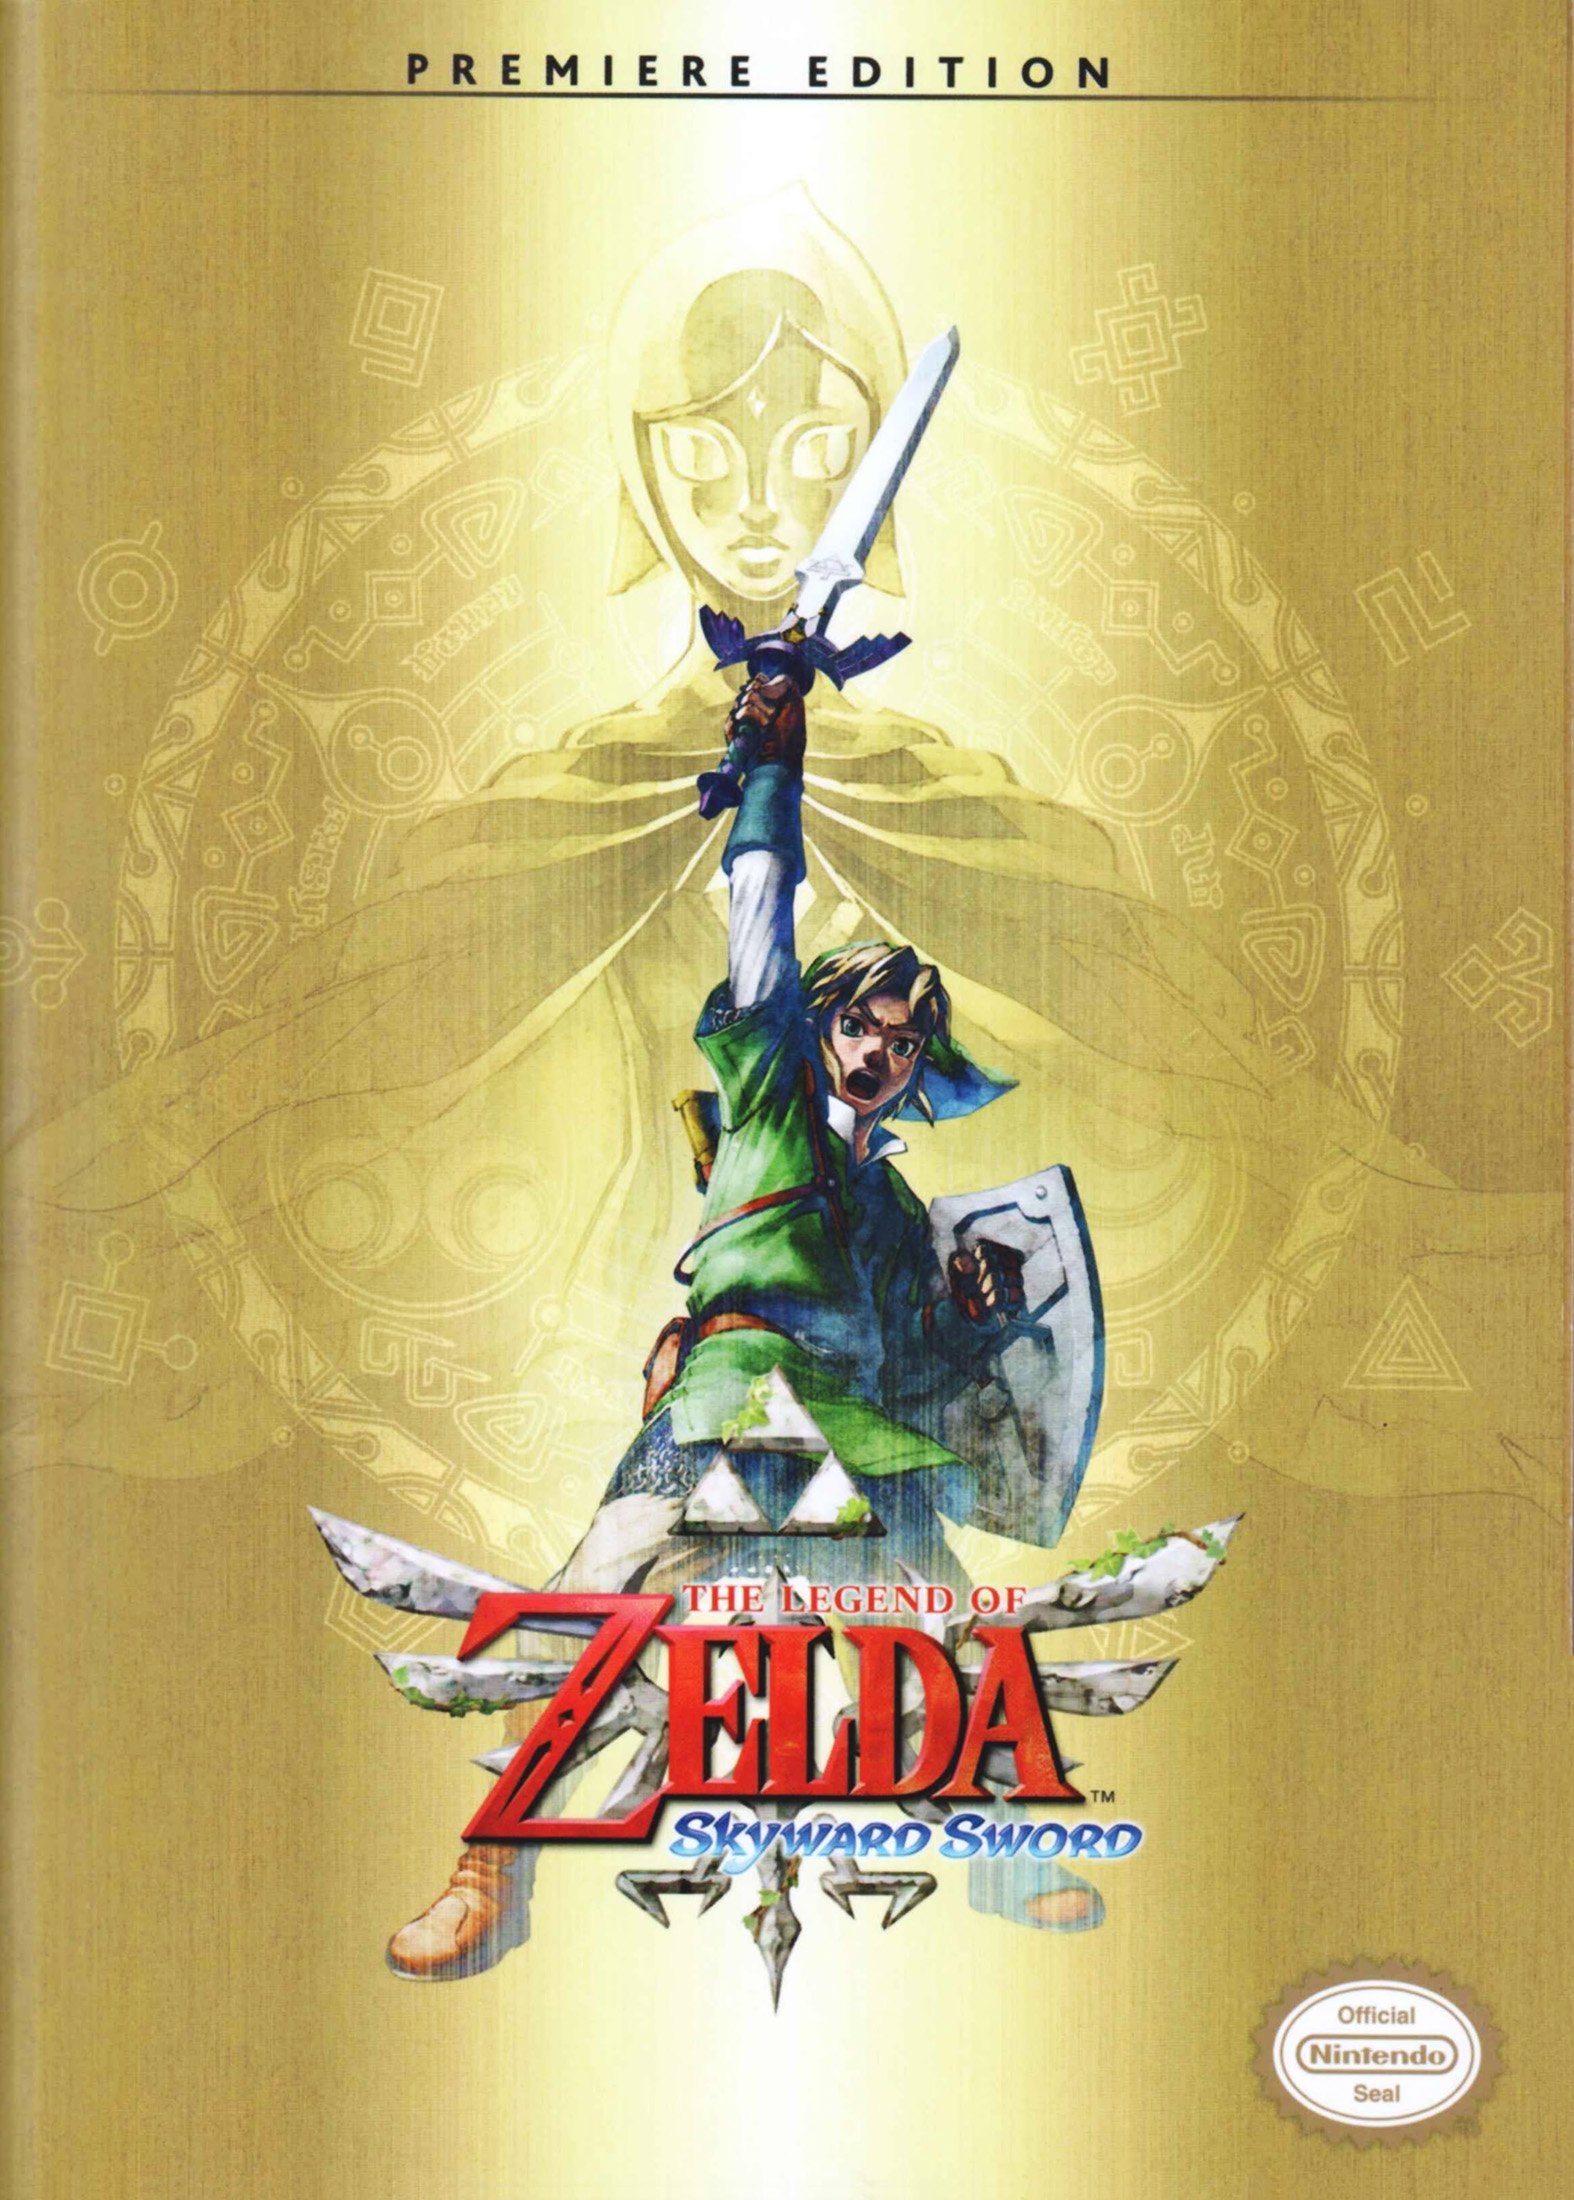 More information about "The Legend of Zelda: Skyward Sword Prima Guide"